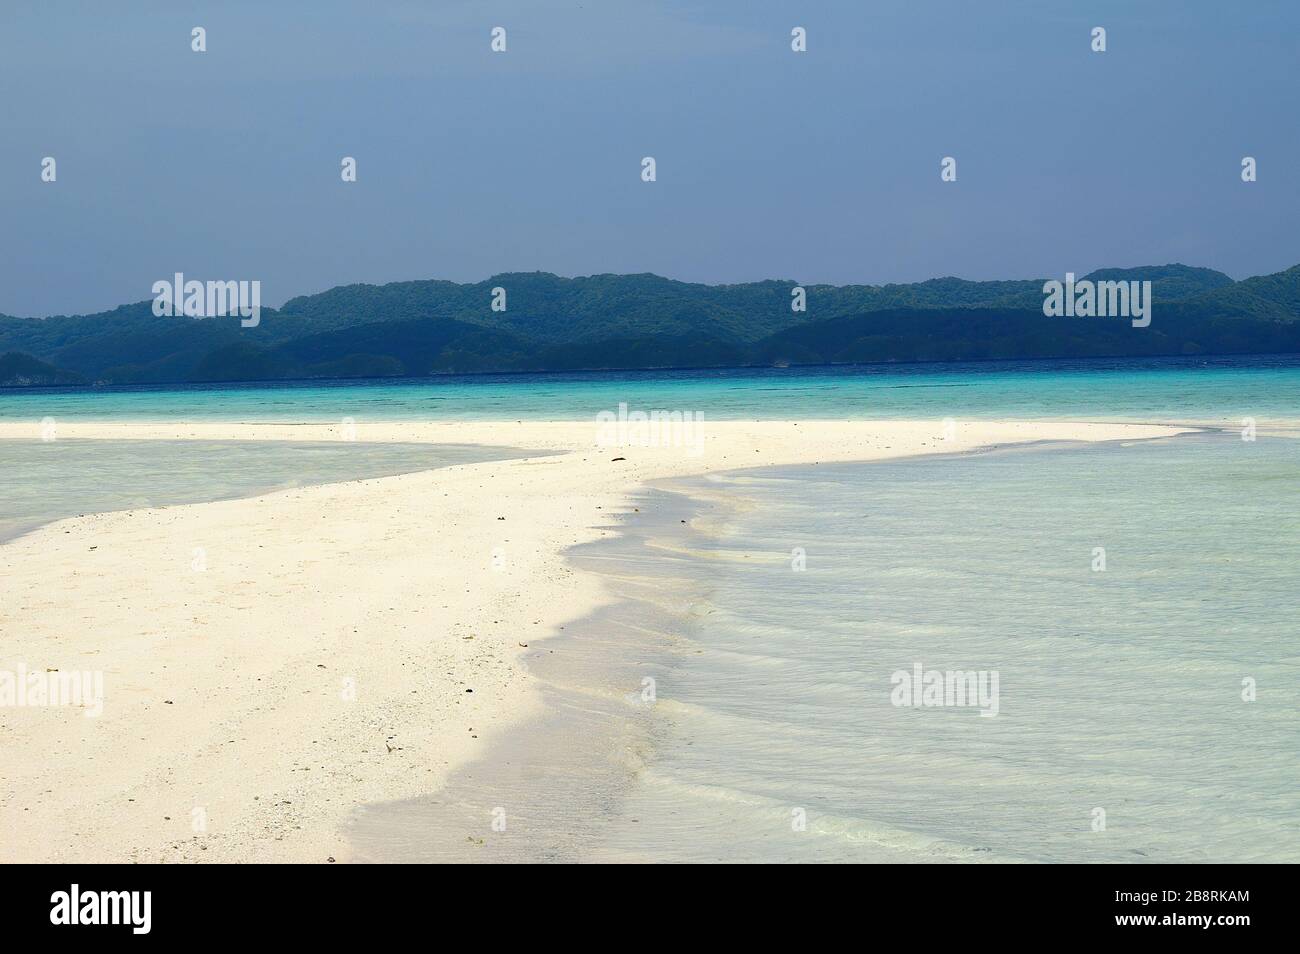 Sunny view of the Kemurbeab island at Palau Stock Photo